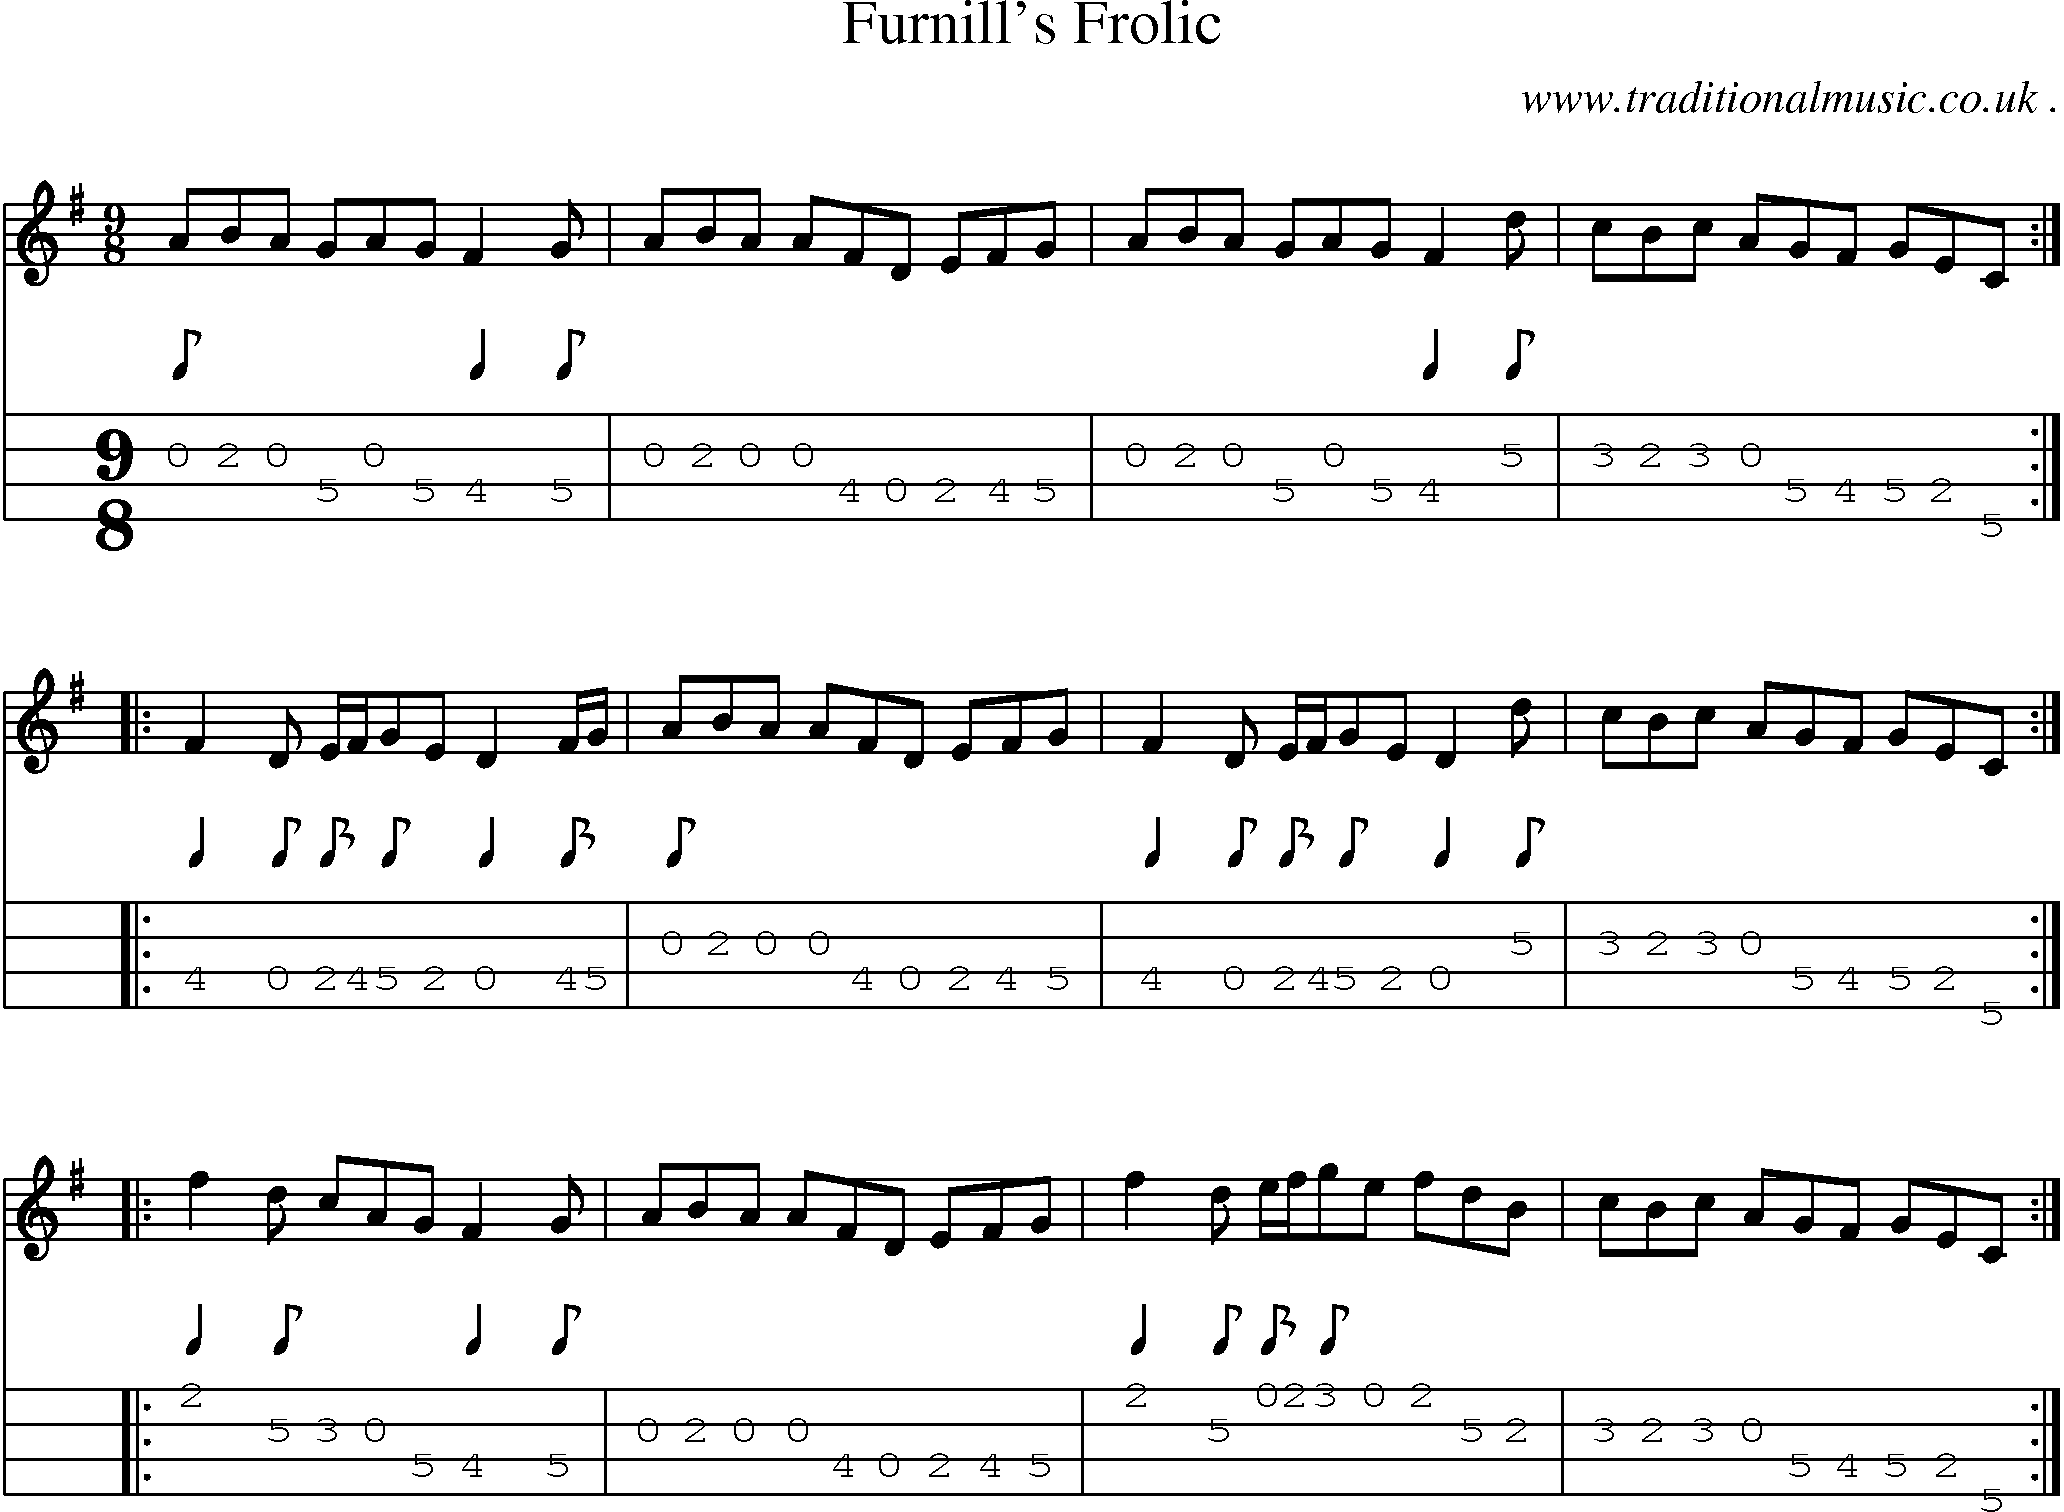 Sheet-Music and Mandolin Tabs for Furnills Frolic